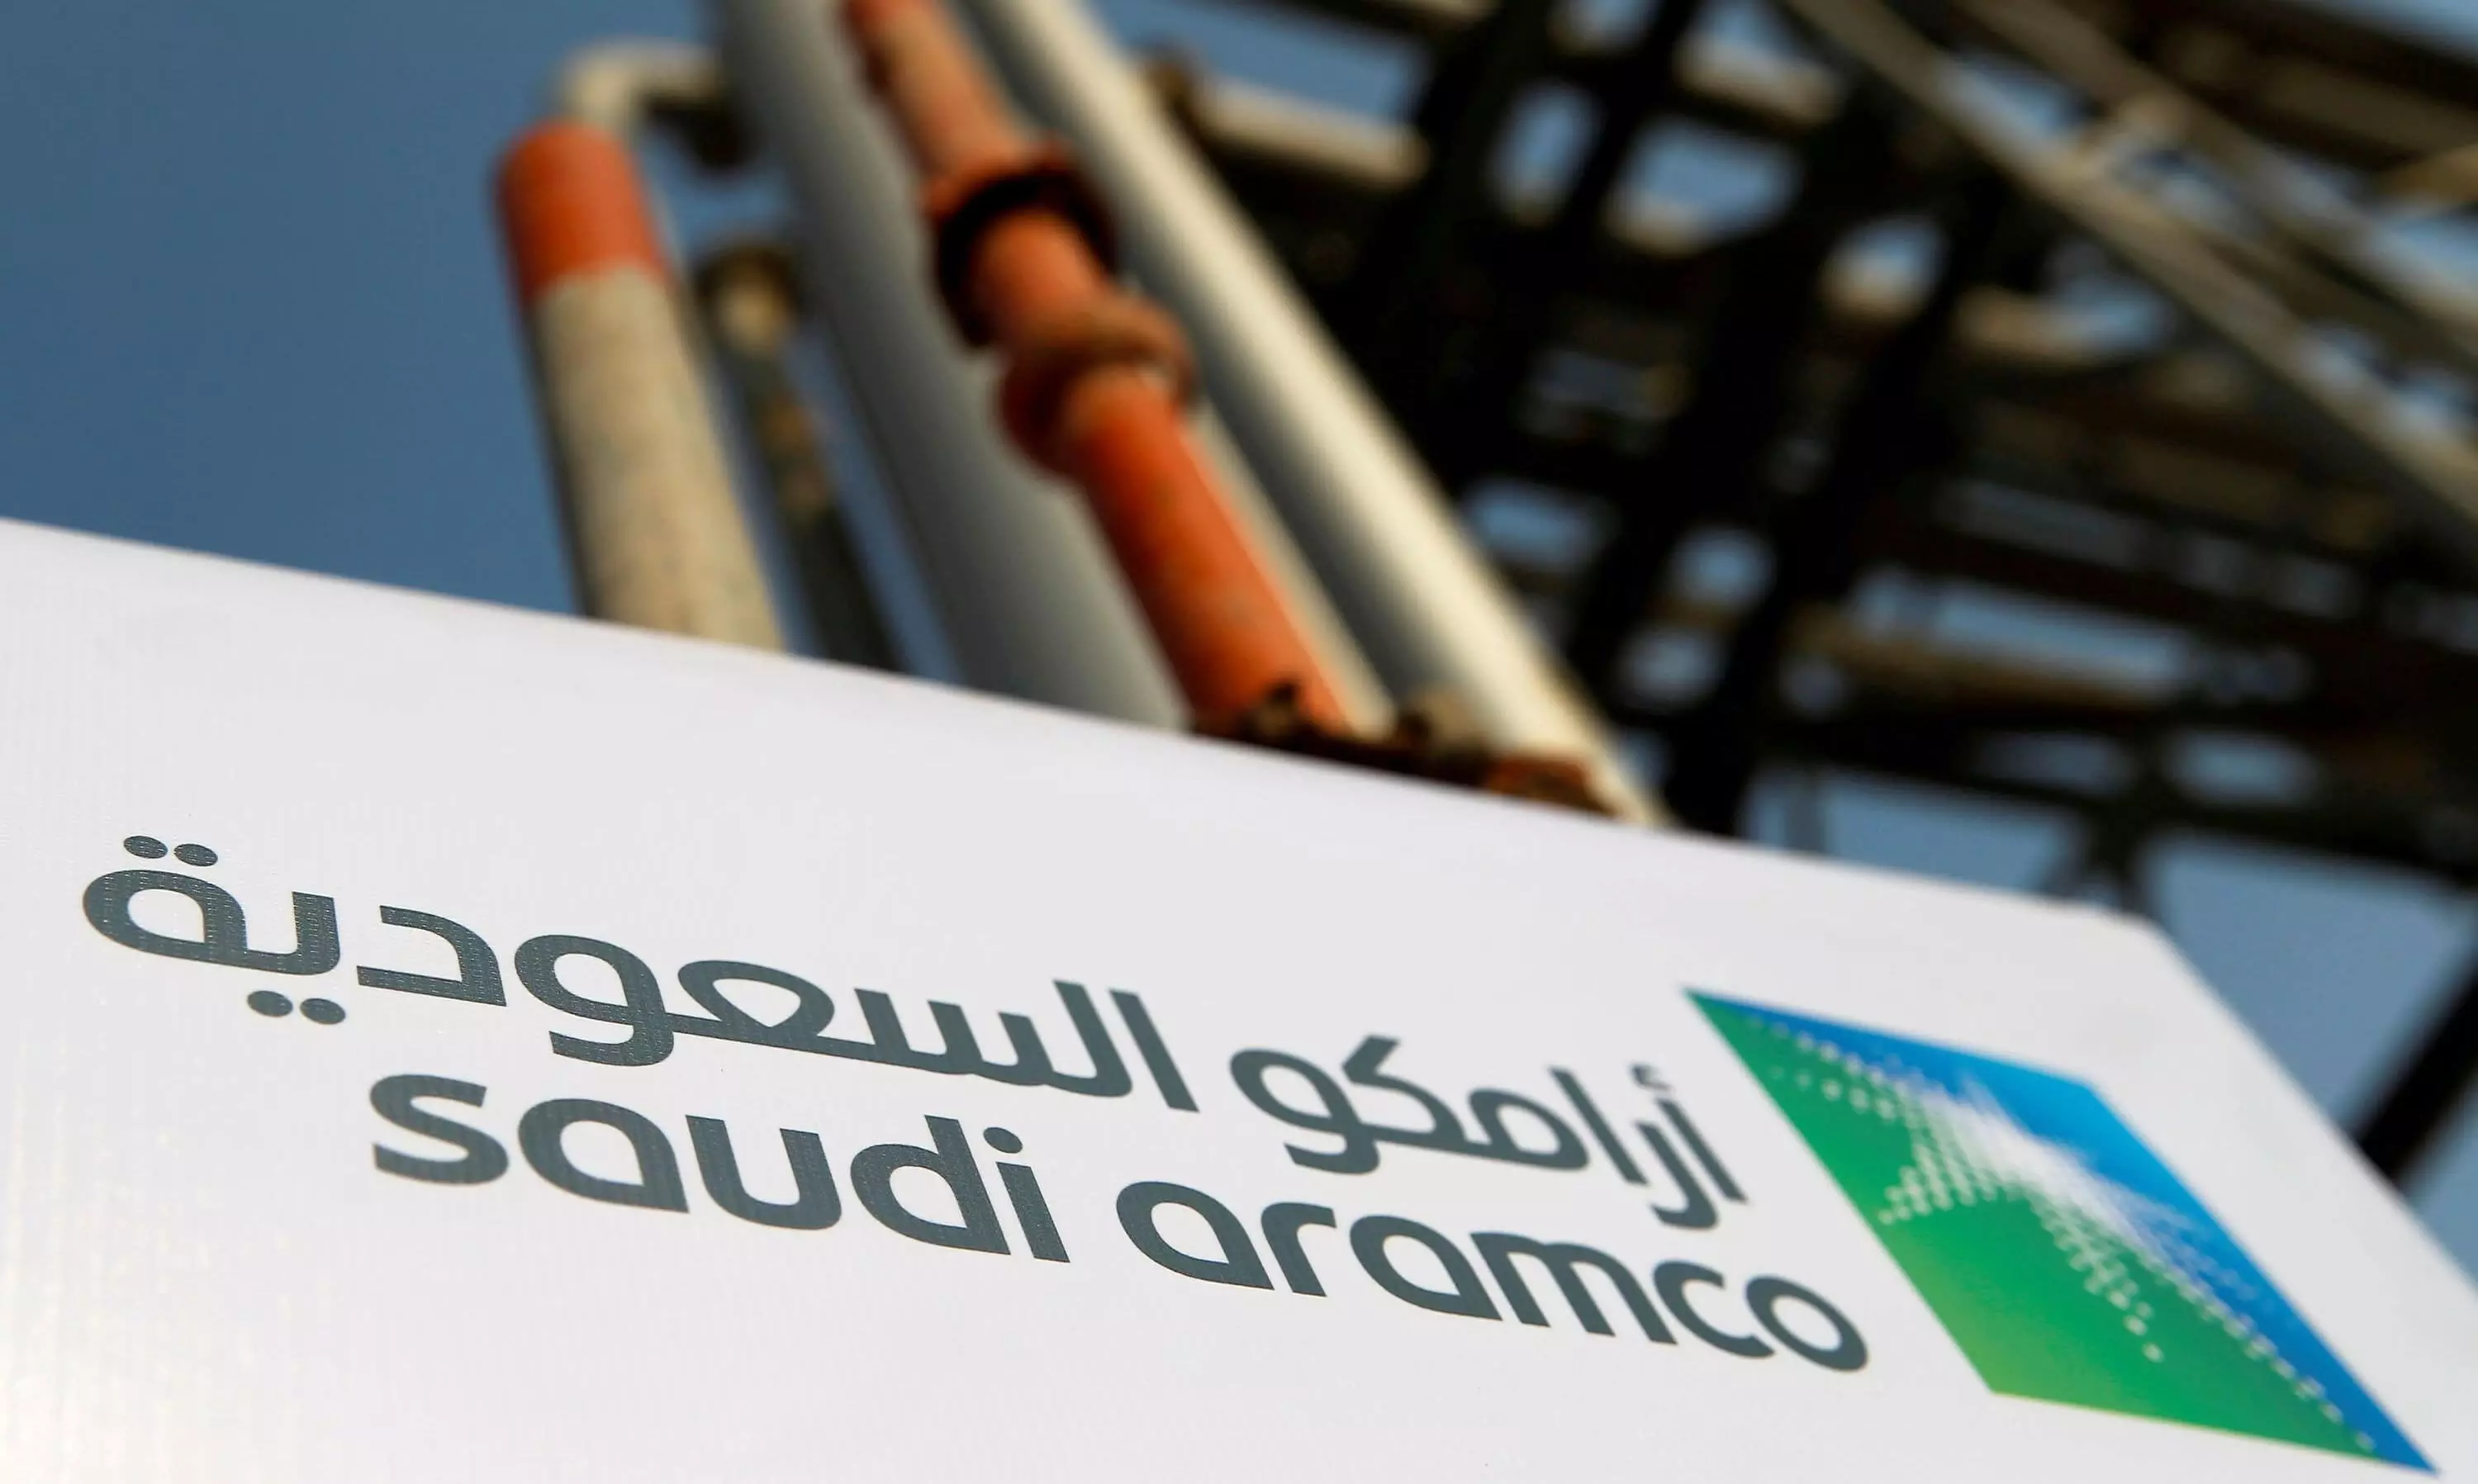 Saudi Aramco sees third-quarter income rise to $30.4 billion